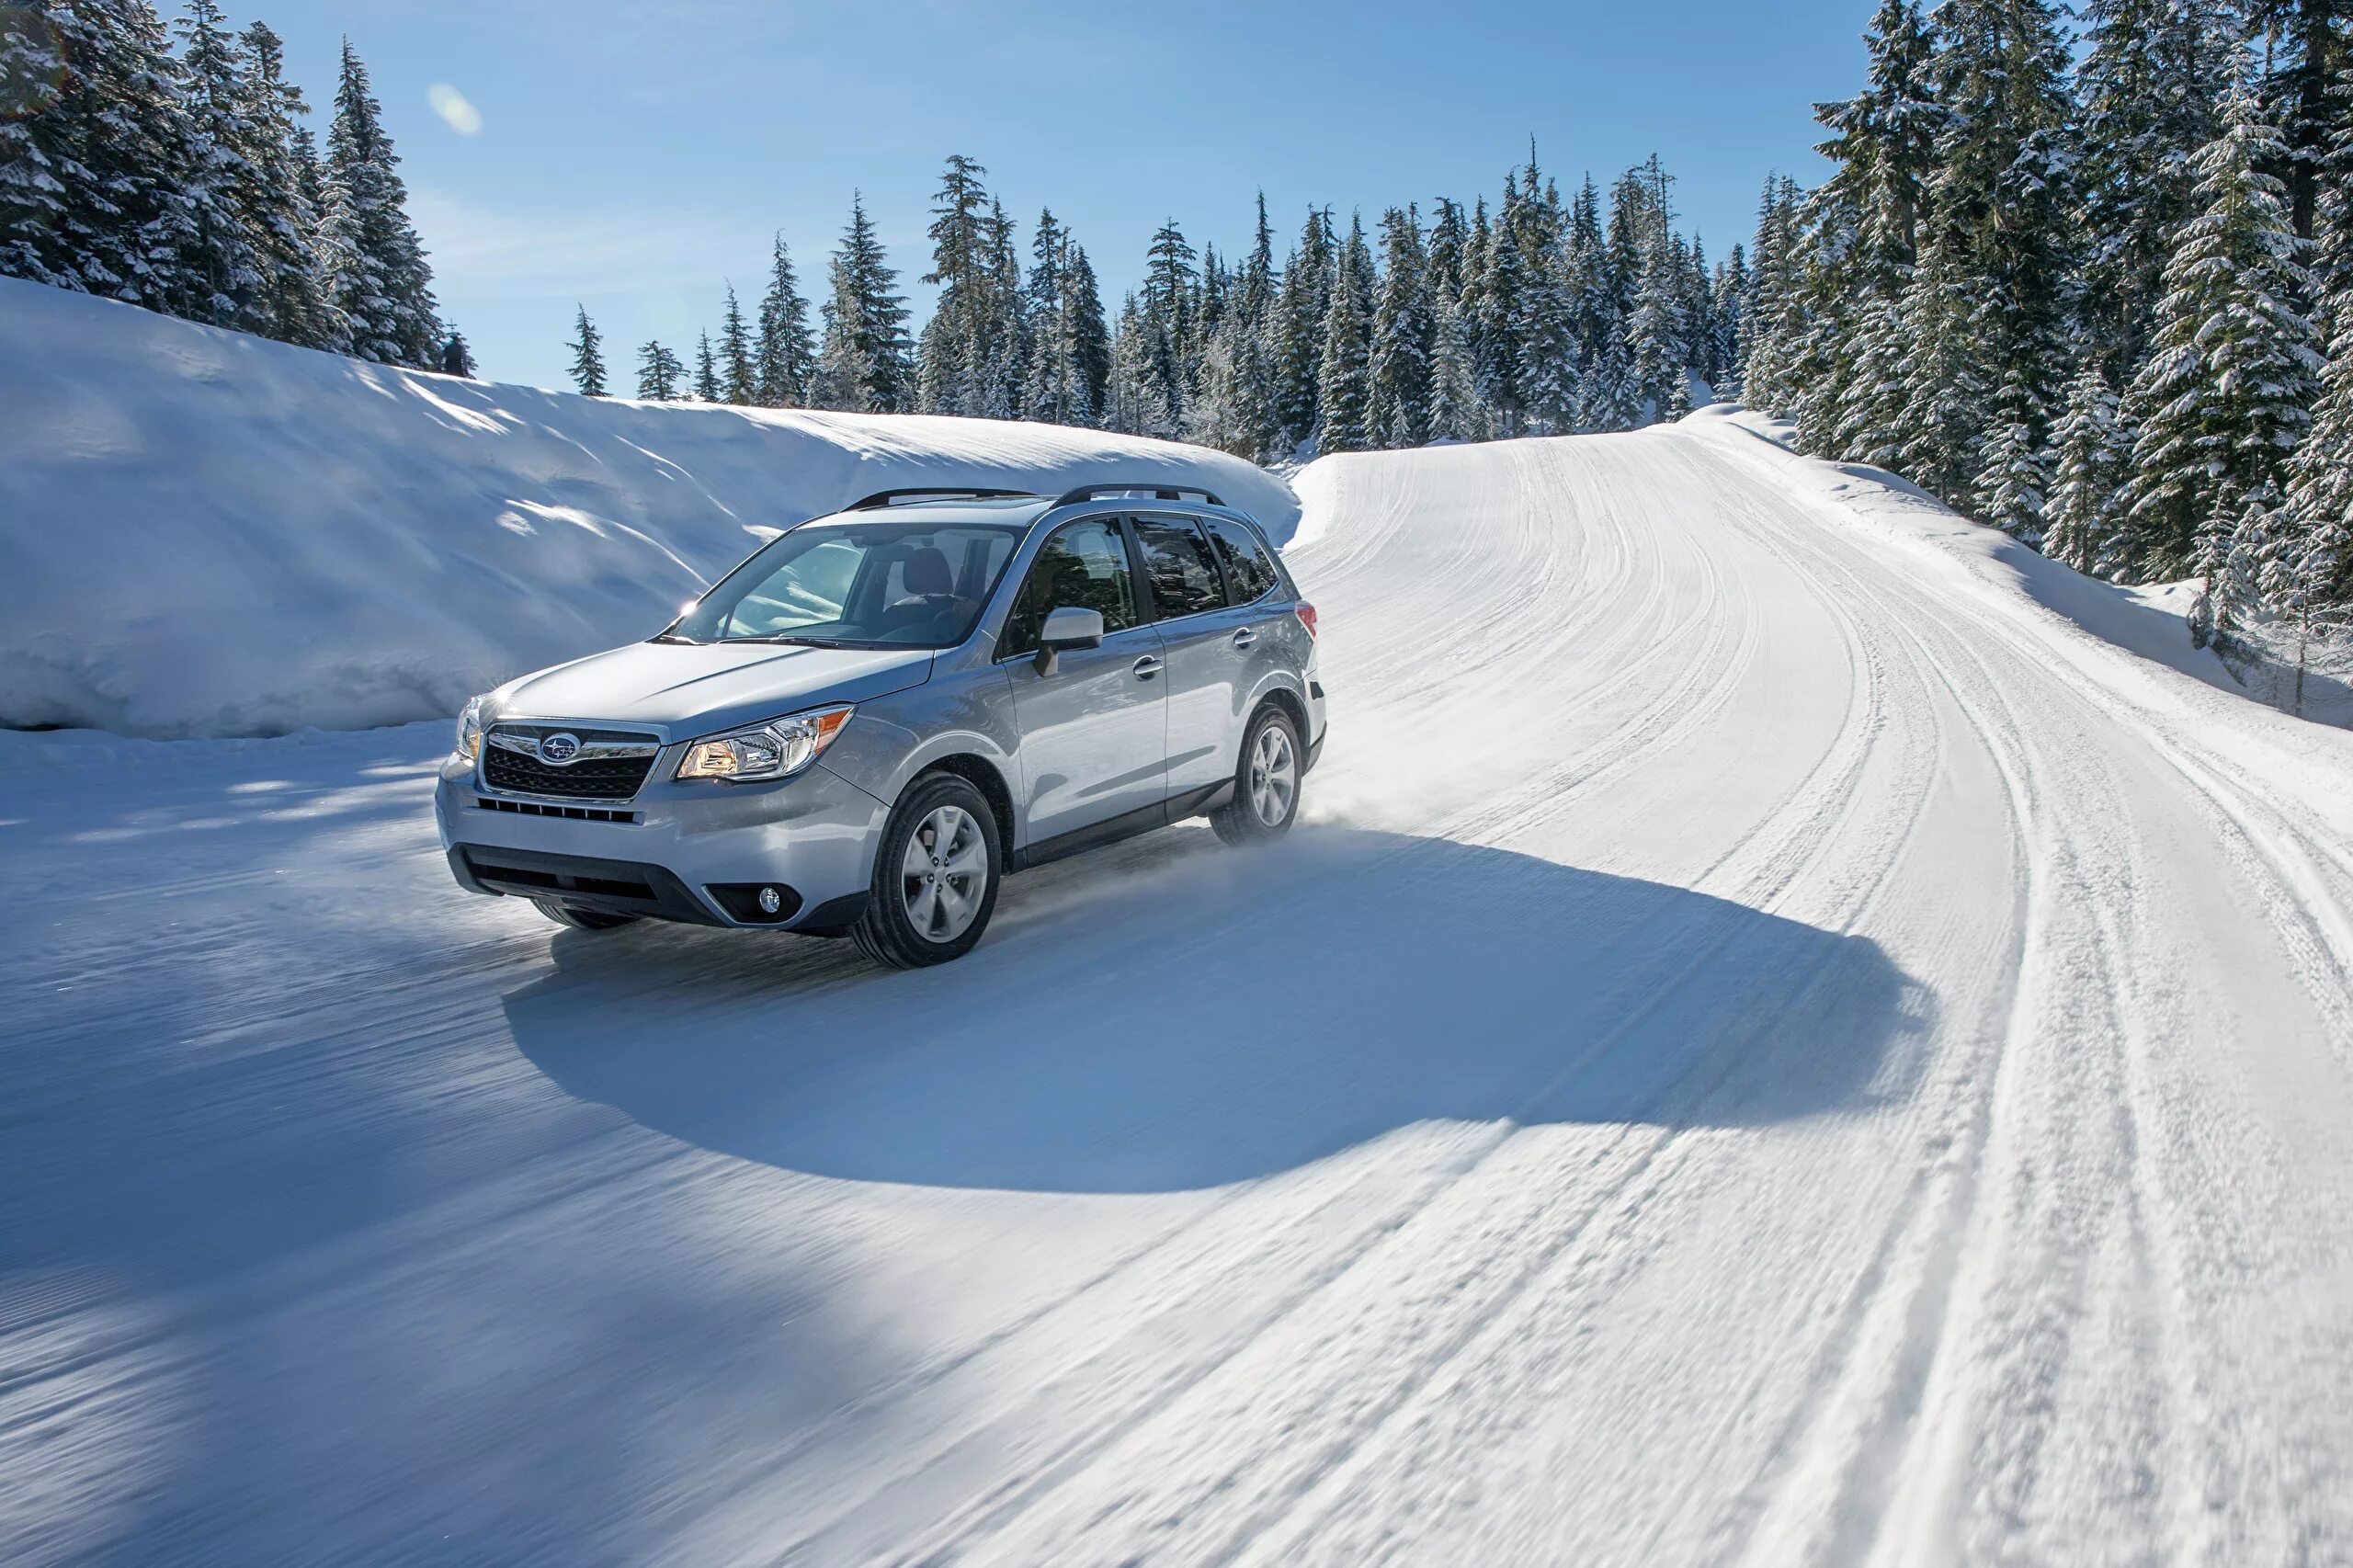 Subaru Forester 2016 серебристый. Субару Форестер 2016 зимой. Субару Форестер зимой серебристый. Авто зимой Субару Форестер.